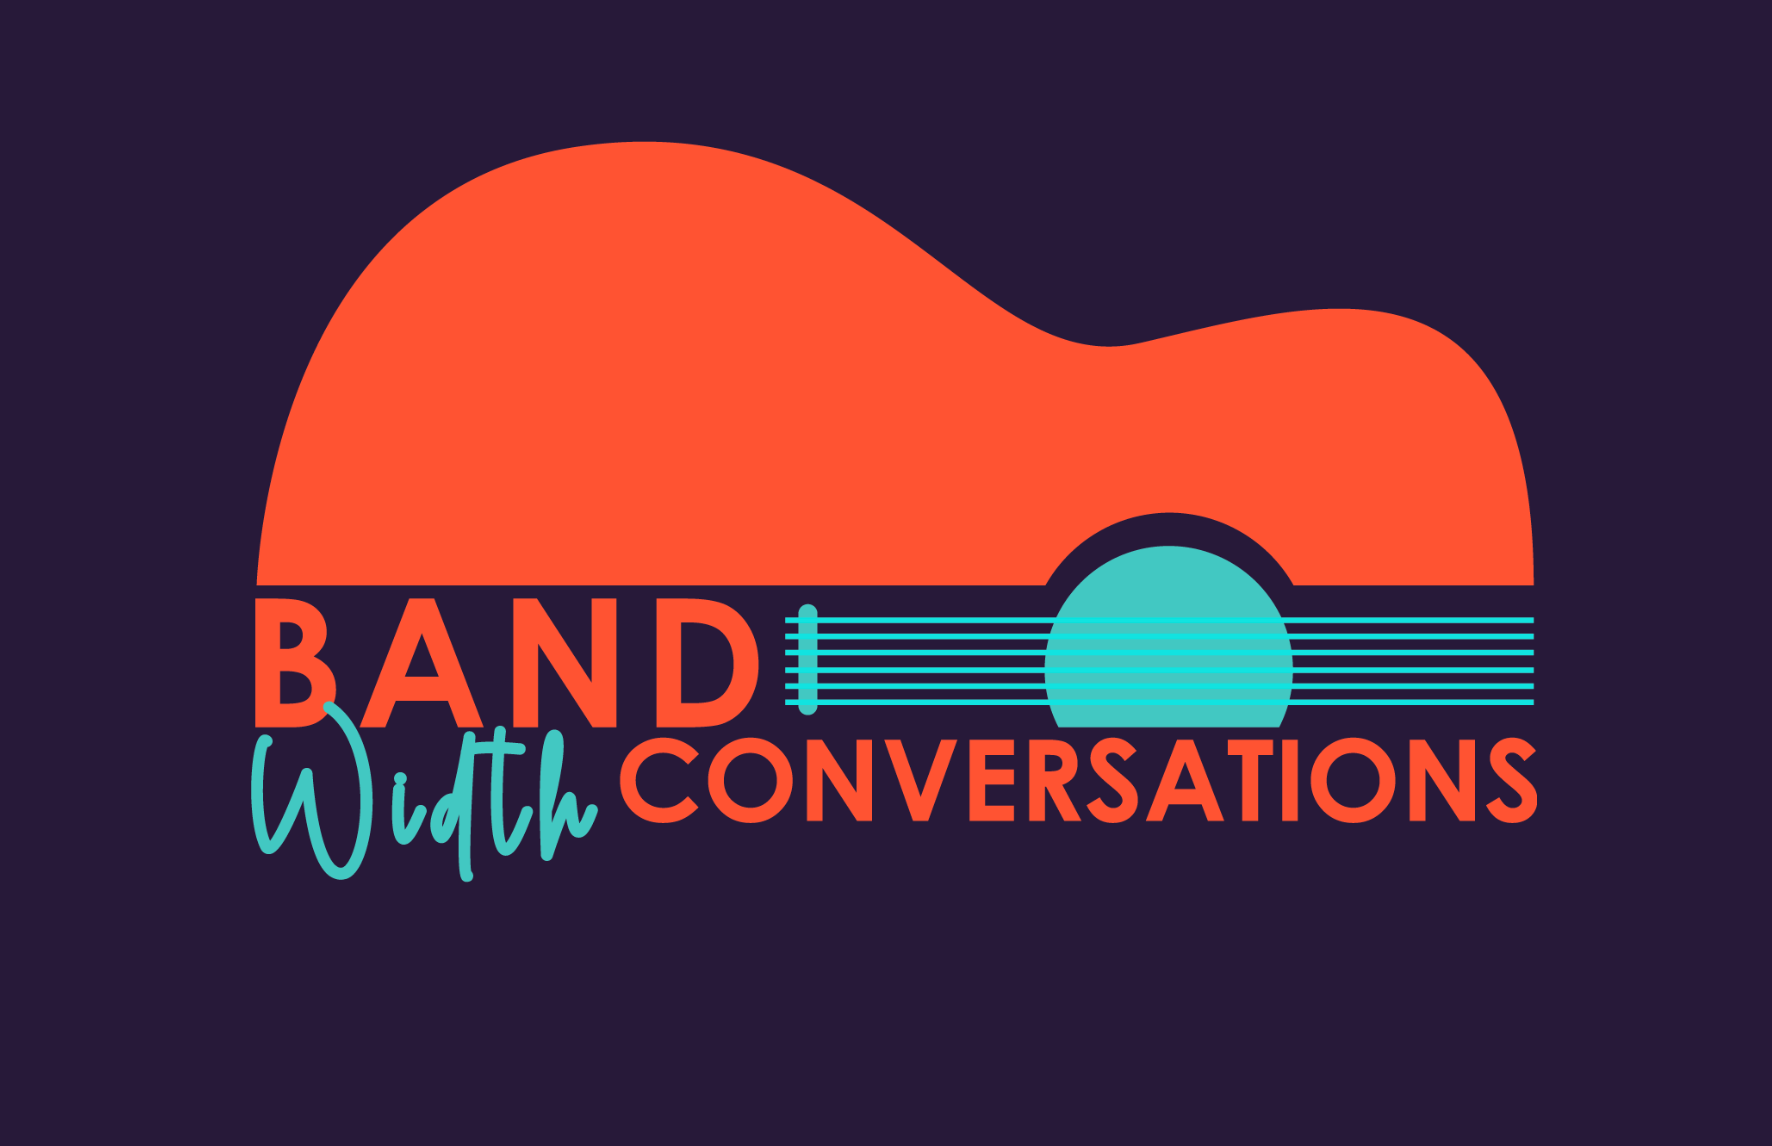 Bandwidth Conversations